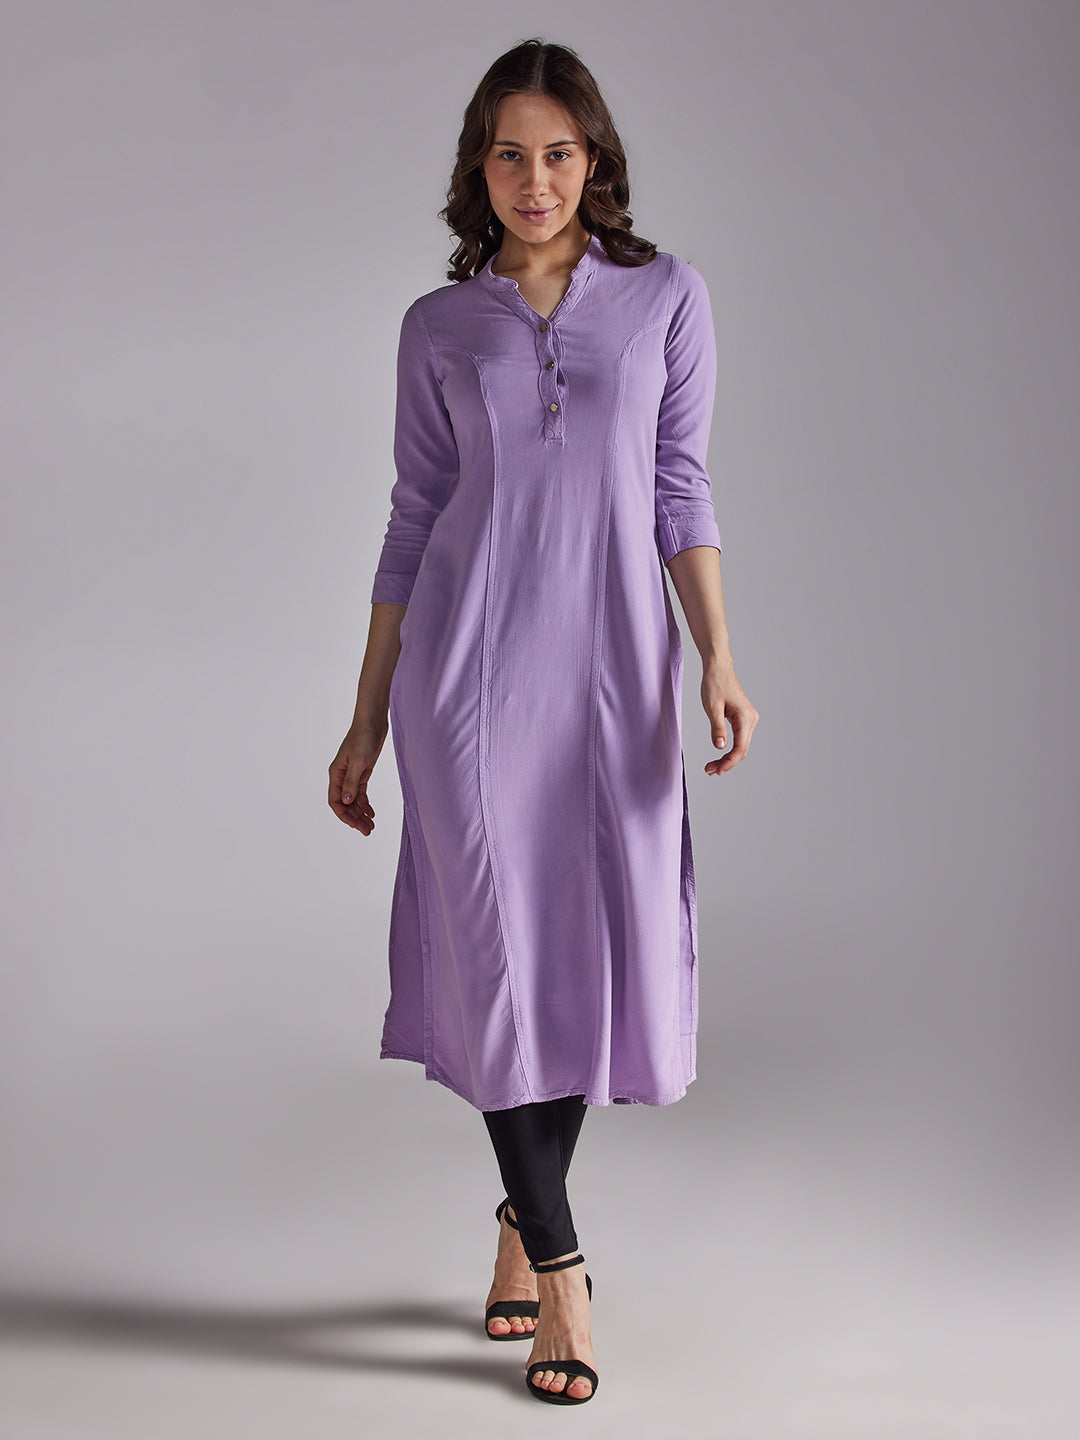 Identiti Women Solid Indo Western Tunic - Lilac.